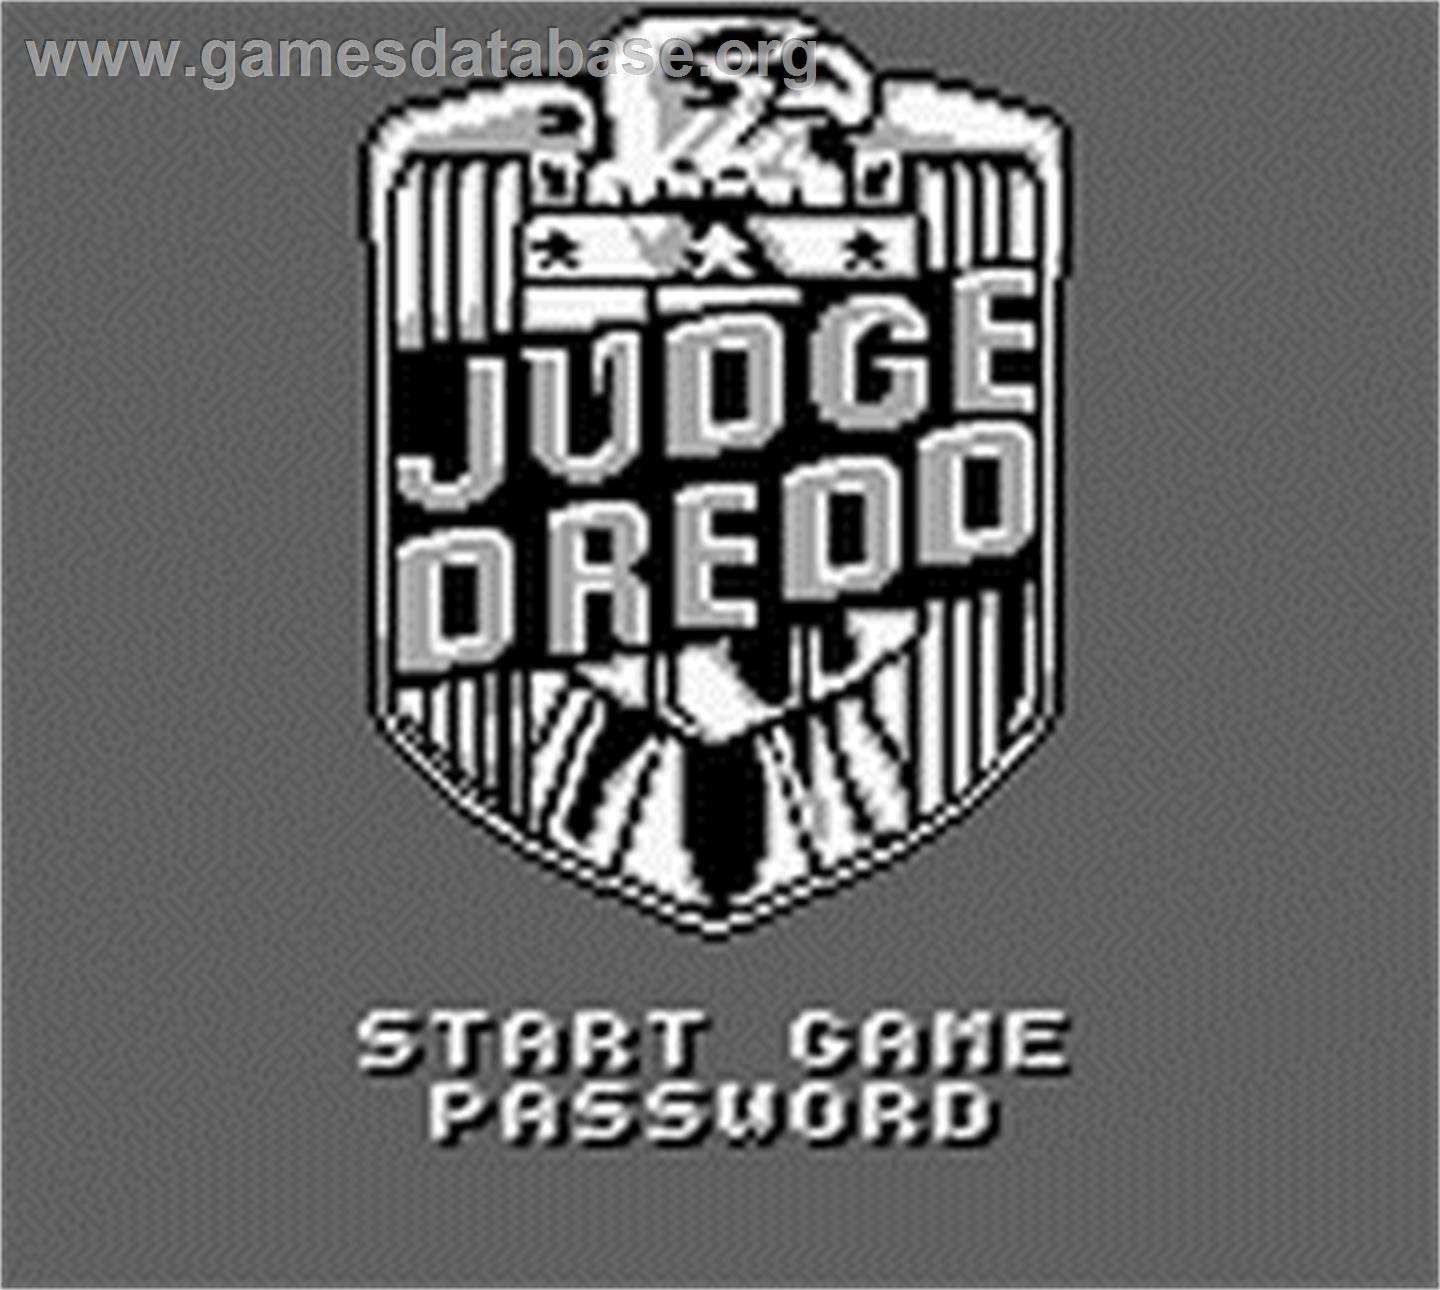 Judge Dredd - Nintendo Game Boy - Artwork - Title Screen